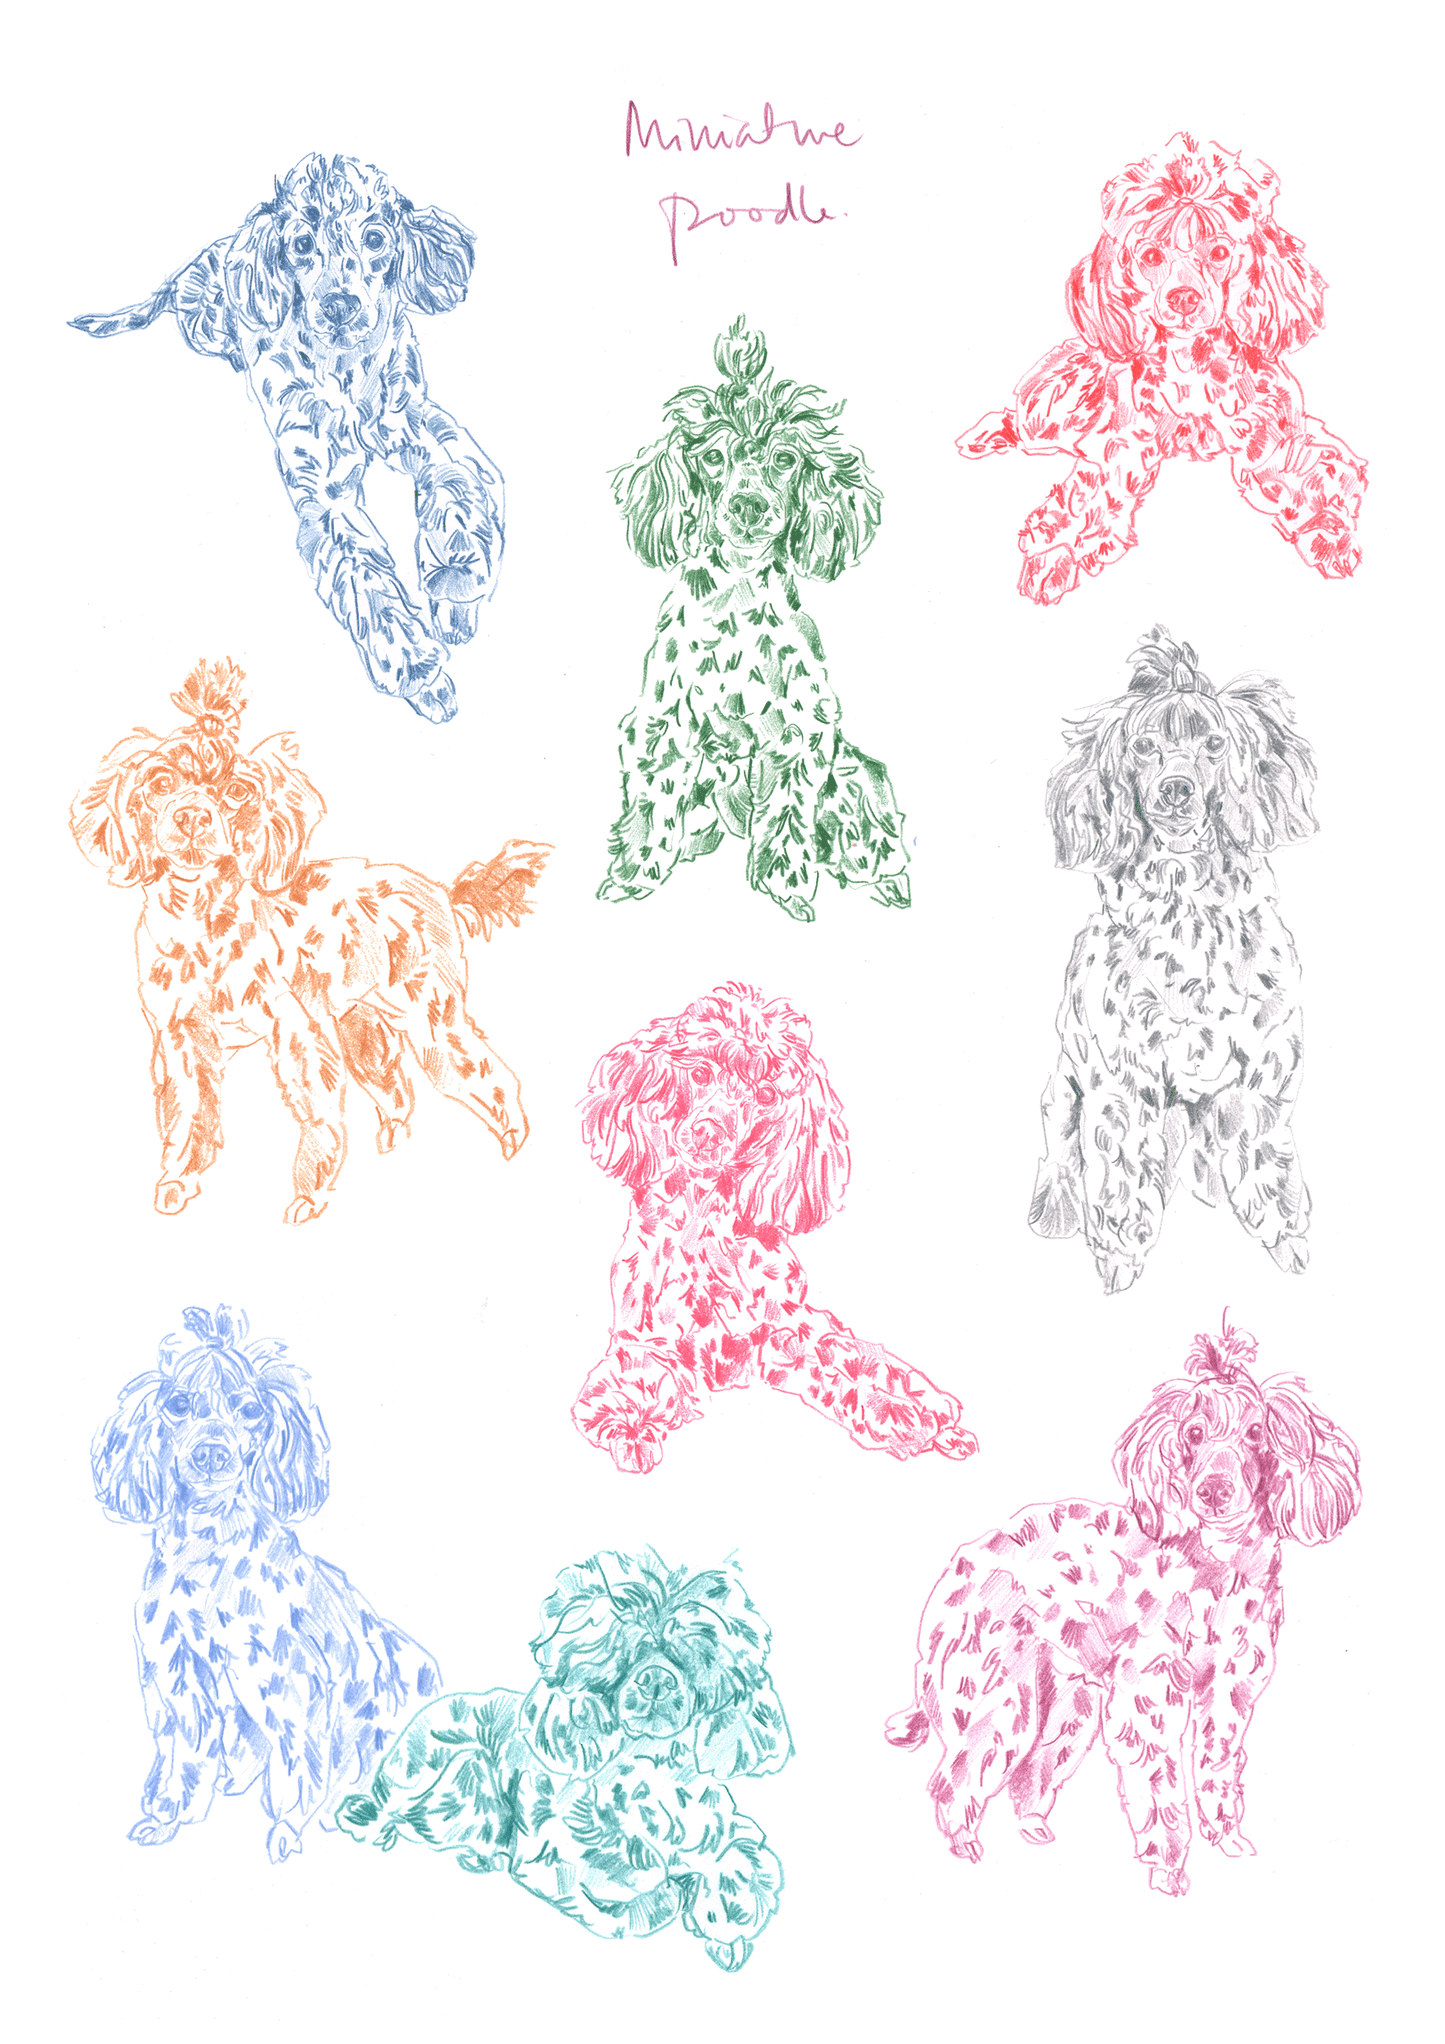 Miniature Poodle Print